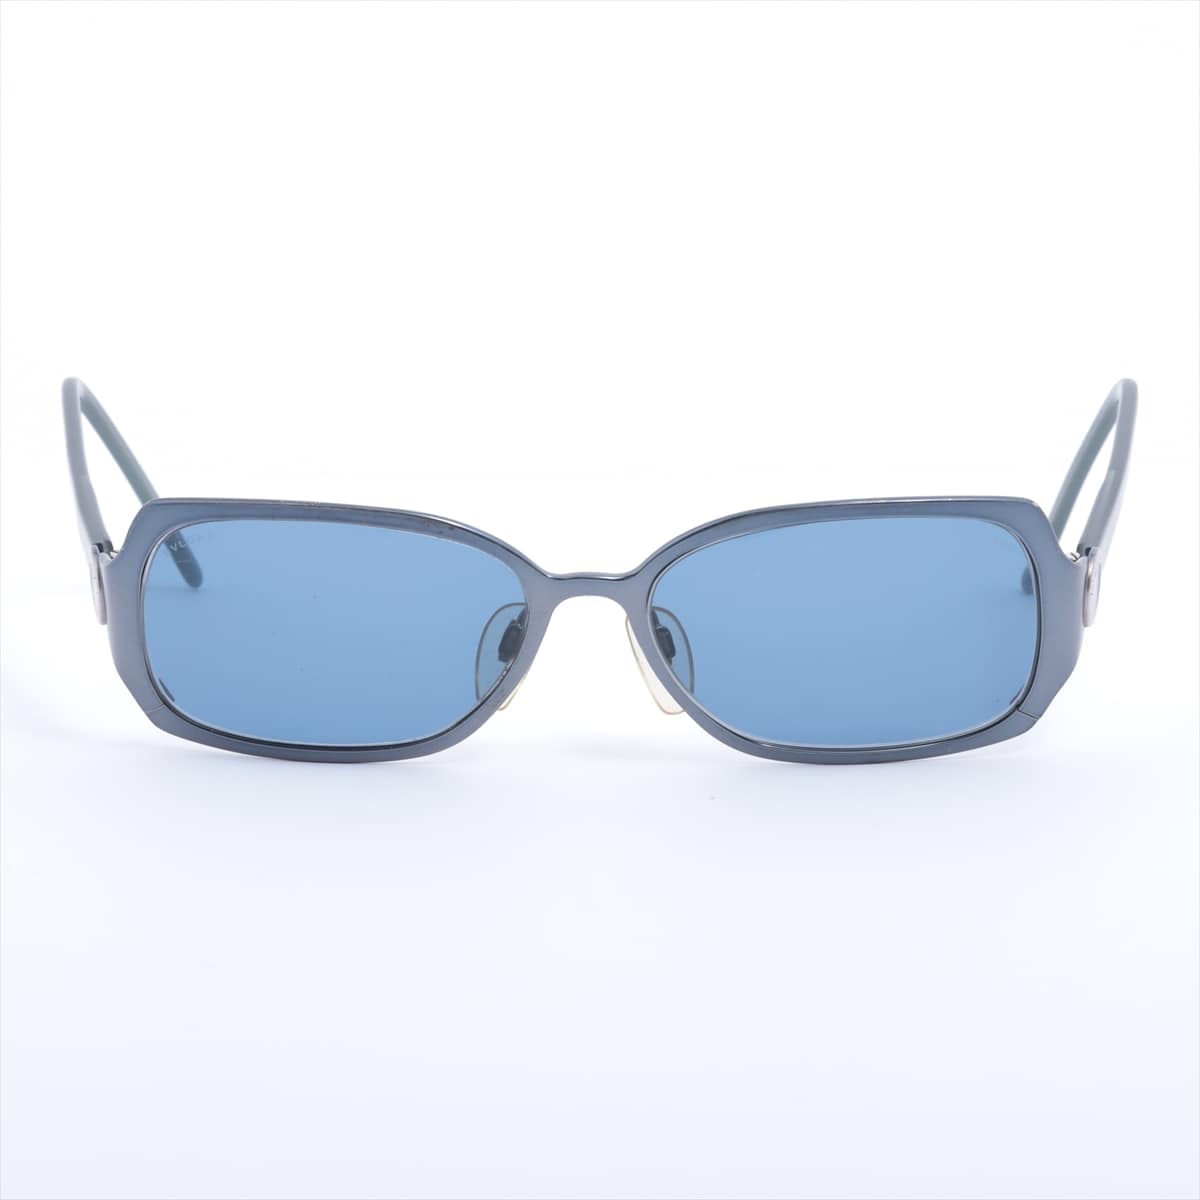 Bvlgari Sunglasses Plastic Navy blue